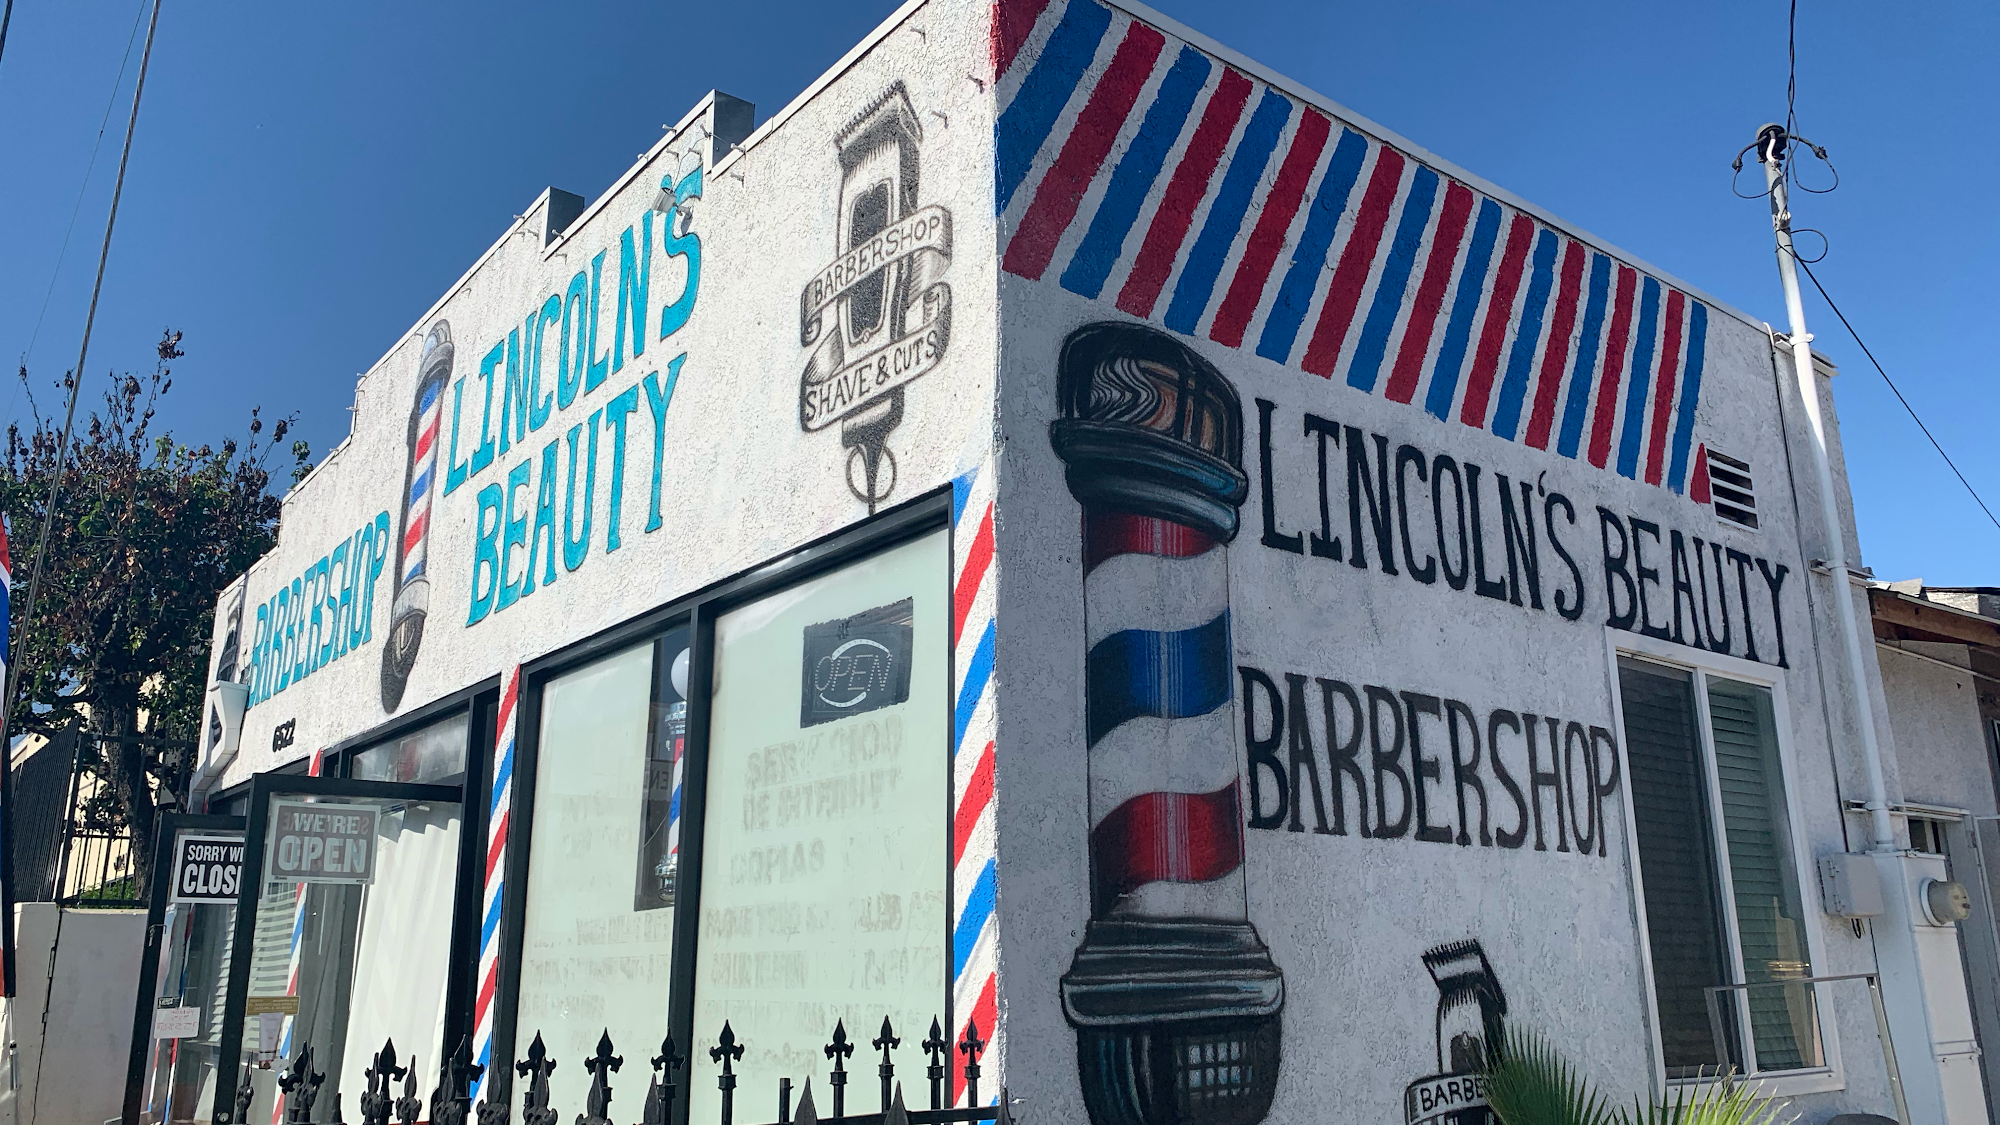 Lincoln’s Beauty Barbershop